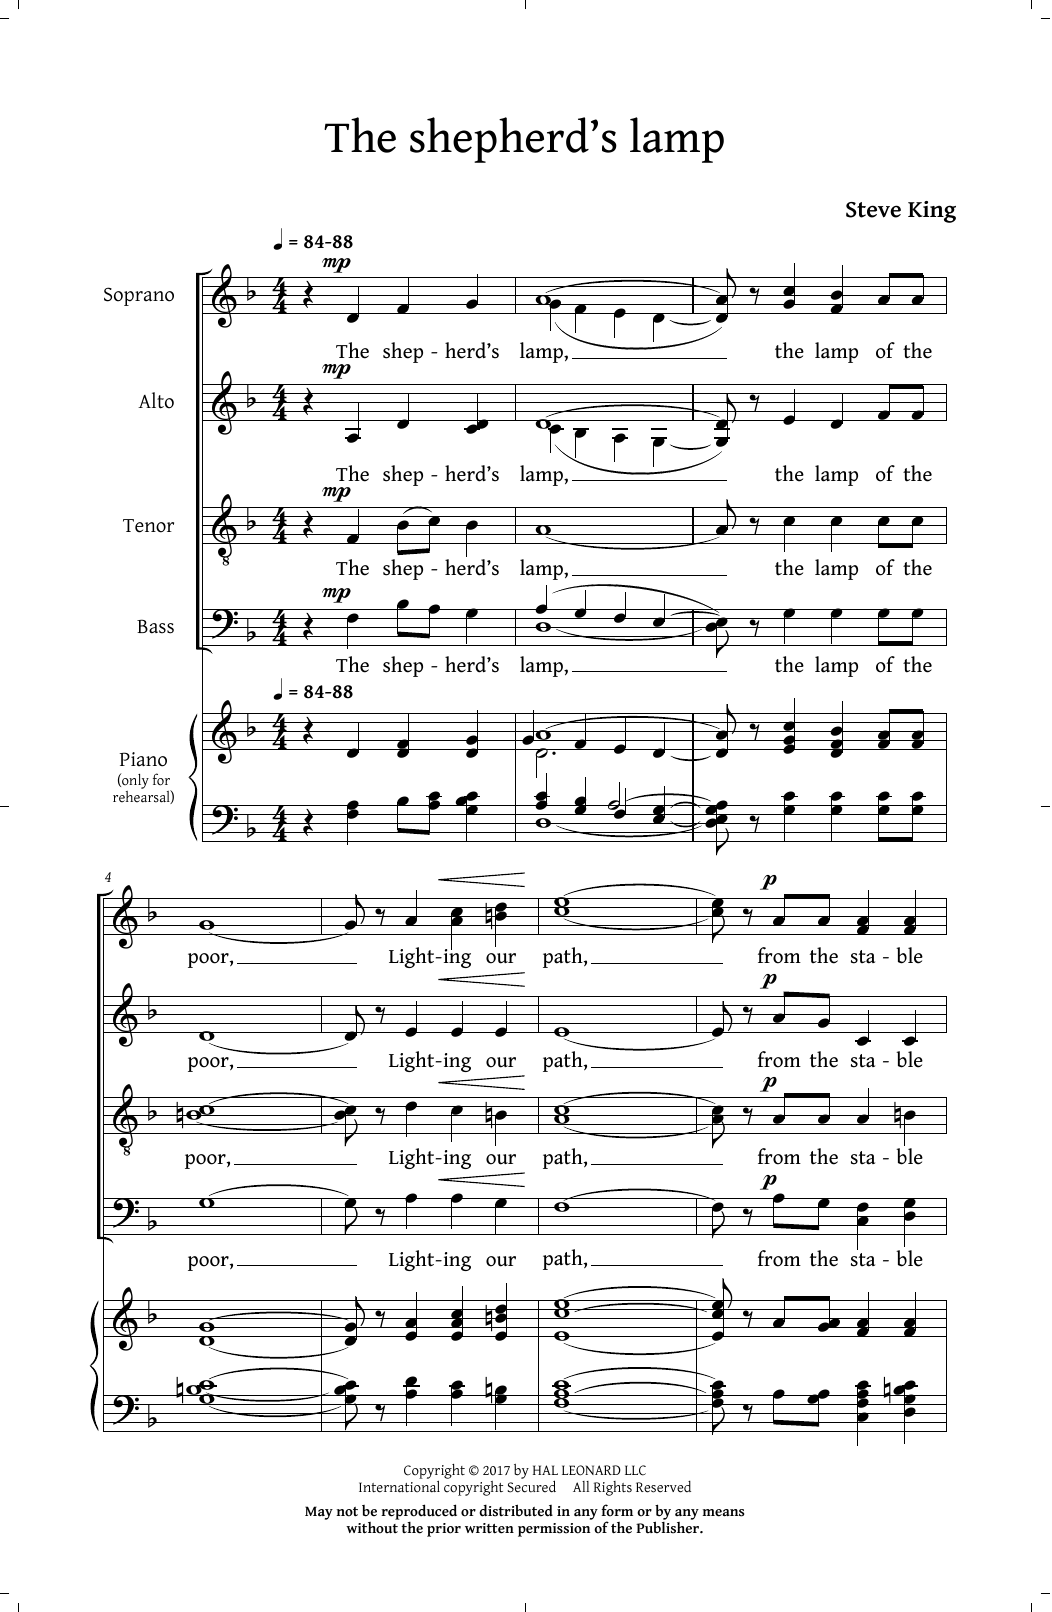 Steve King The Shepherd's Lamp Carol Sheet Music Notes & Chords for SATB - Download or Print PDF